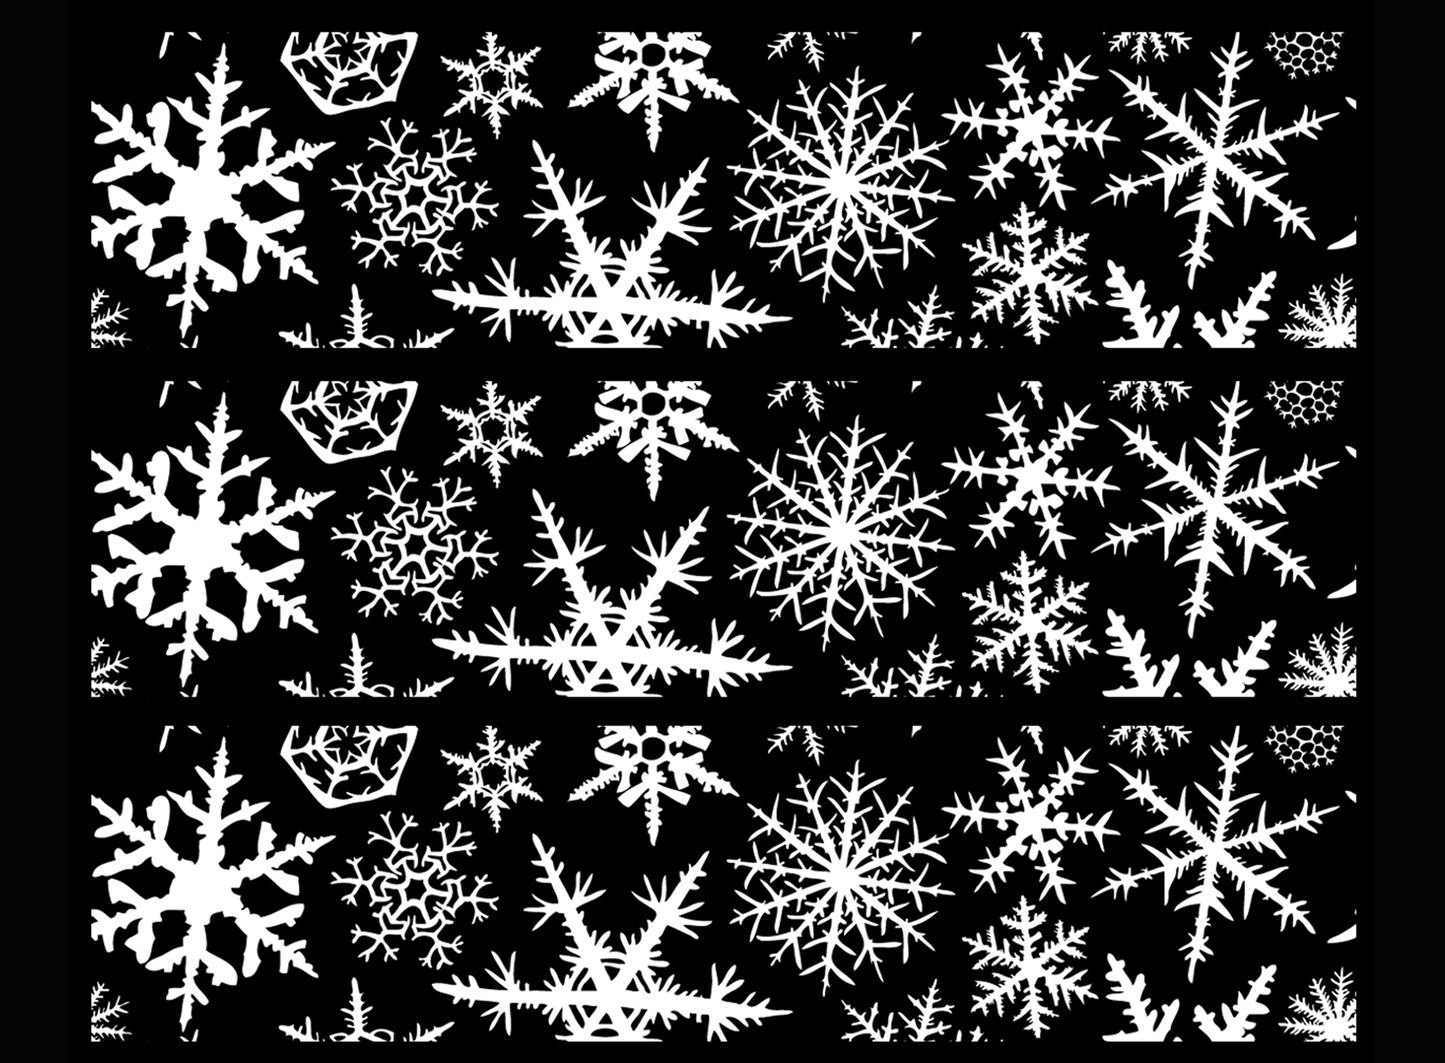 Barrette Snowflake 6 pcs  4" White Fused Glass Decals